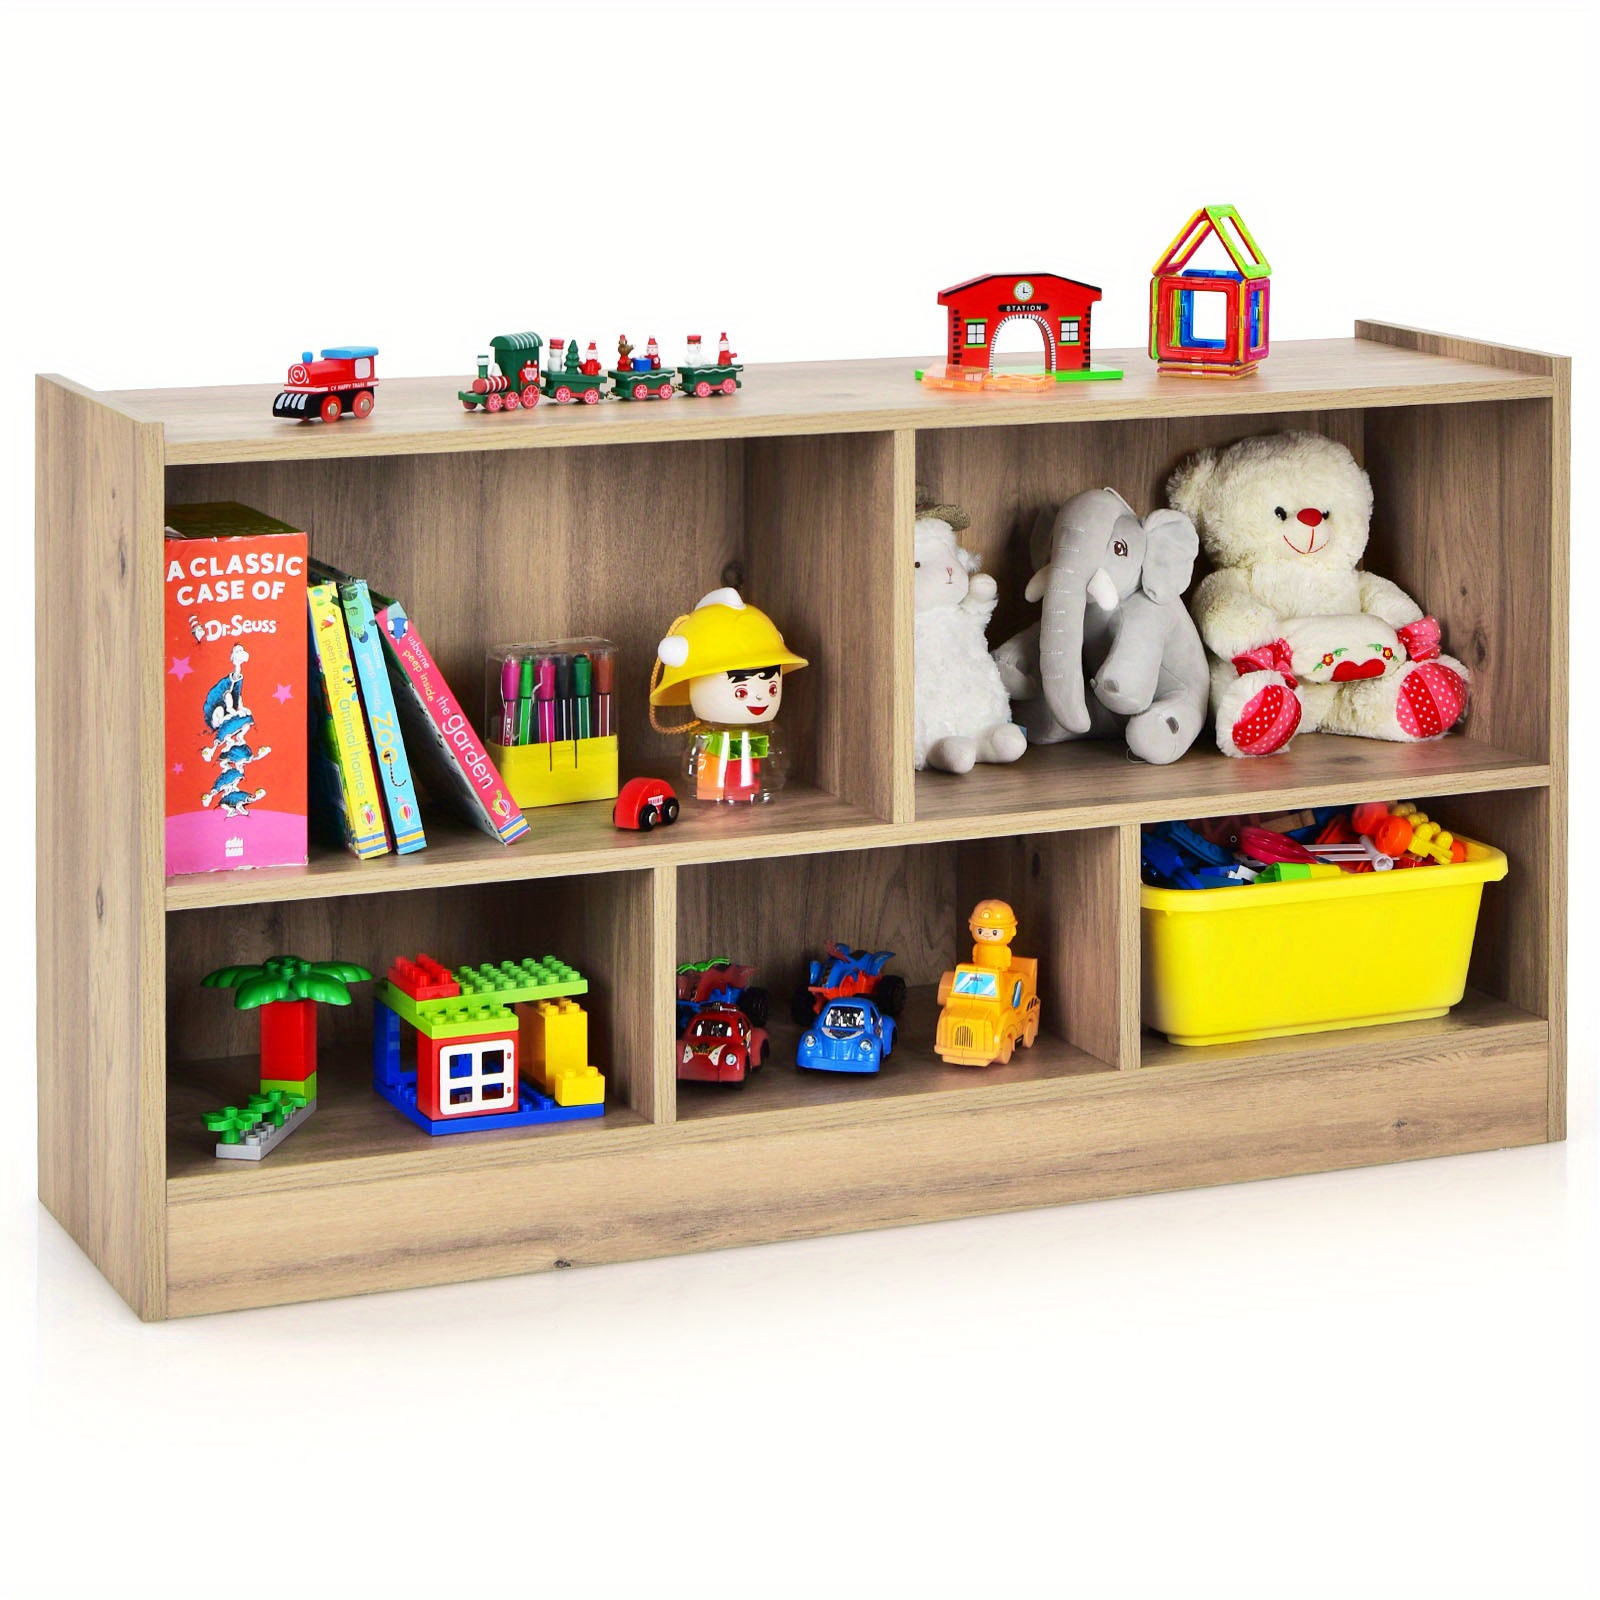 

Maxmass Wooden 5 Cube Chidren Storage Cabinet Bookcase Toy Storage Kids Rooms Classroom